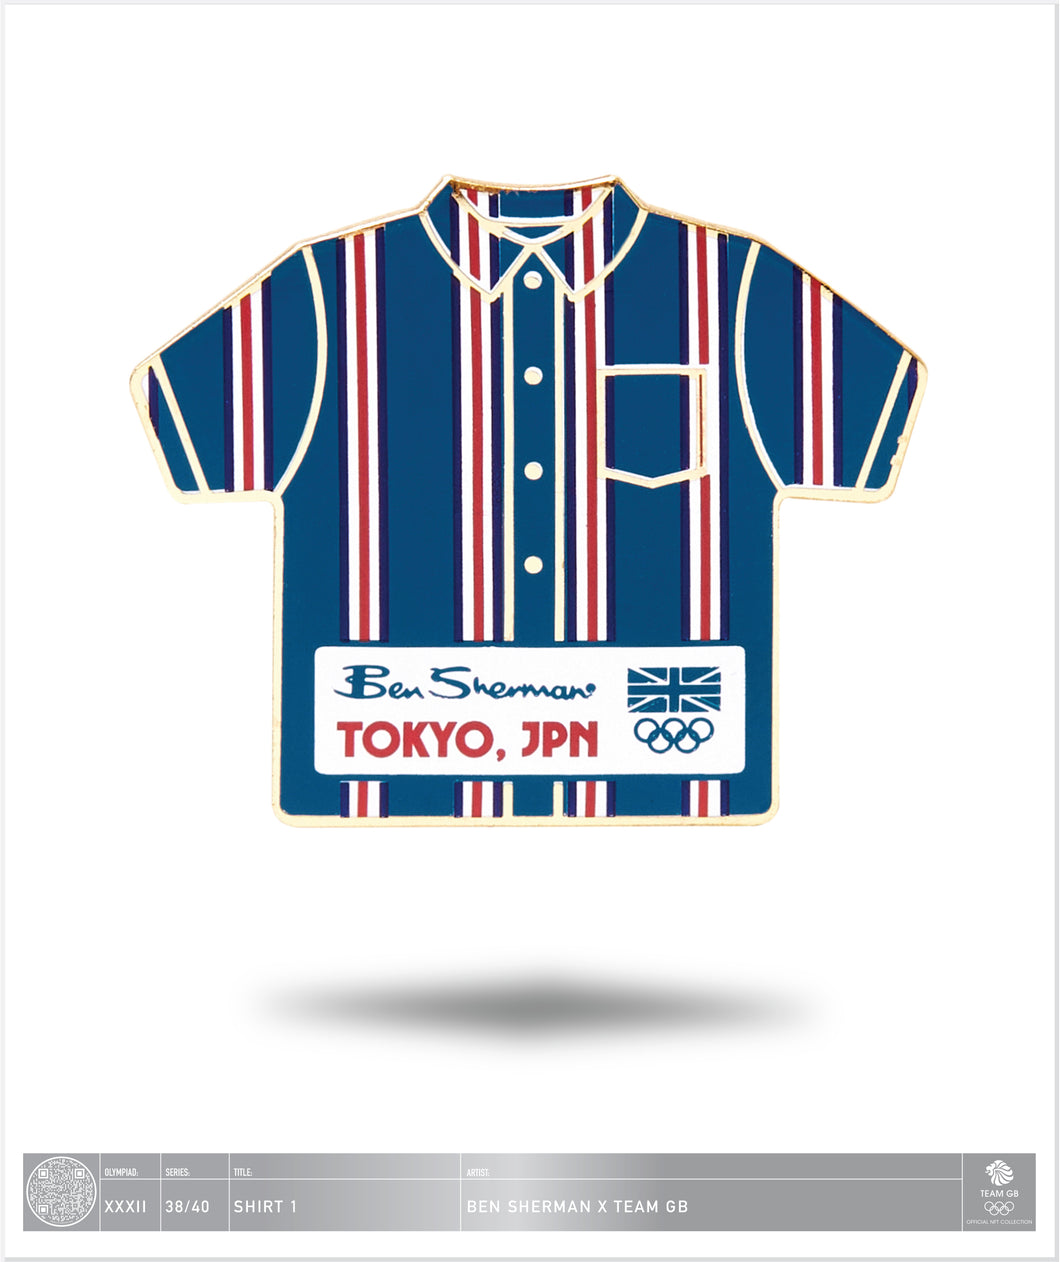 Ben Sherman Tokyo - Shirt 1 - 38 / 40